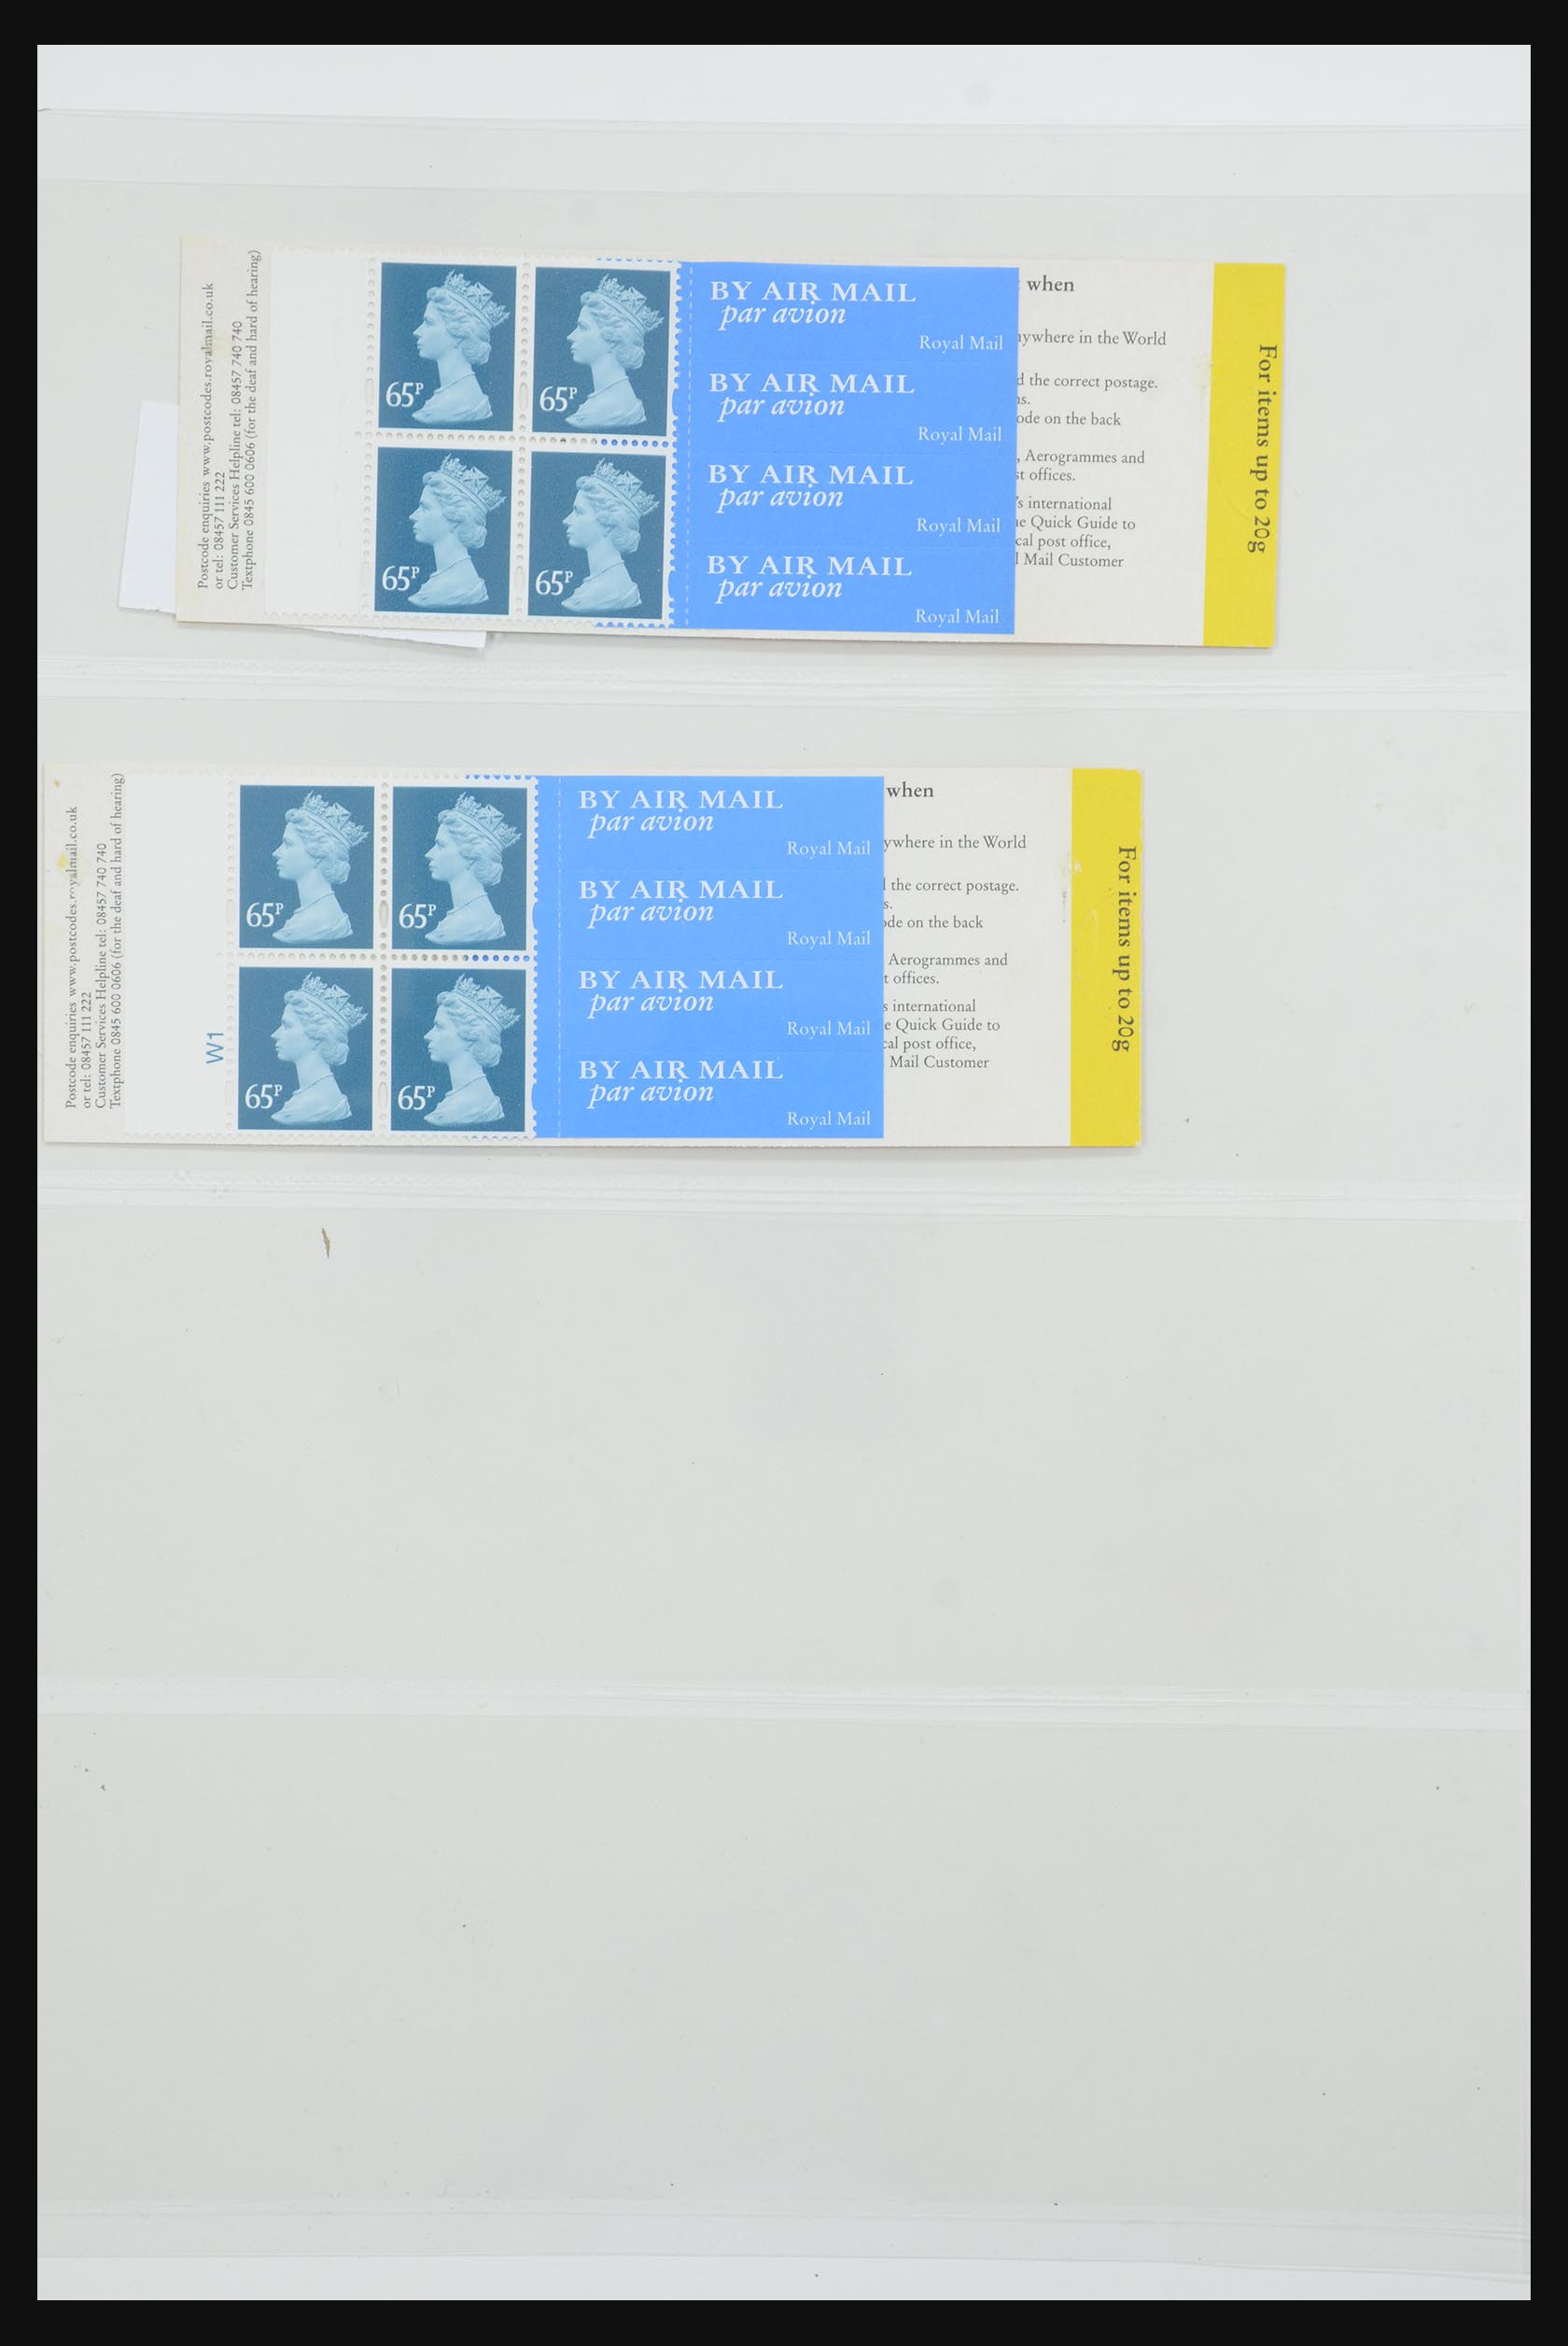 31959 086 - 31959 Great Britain stampbooklets 1987-2016!!